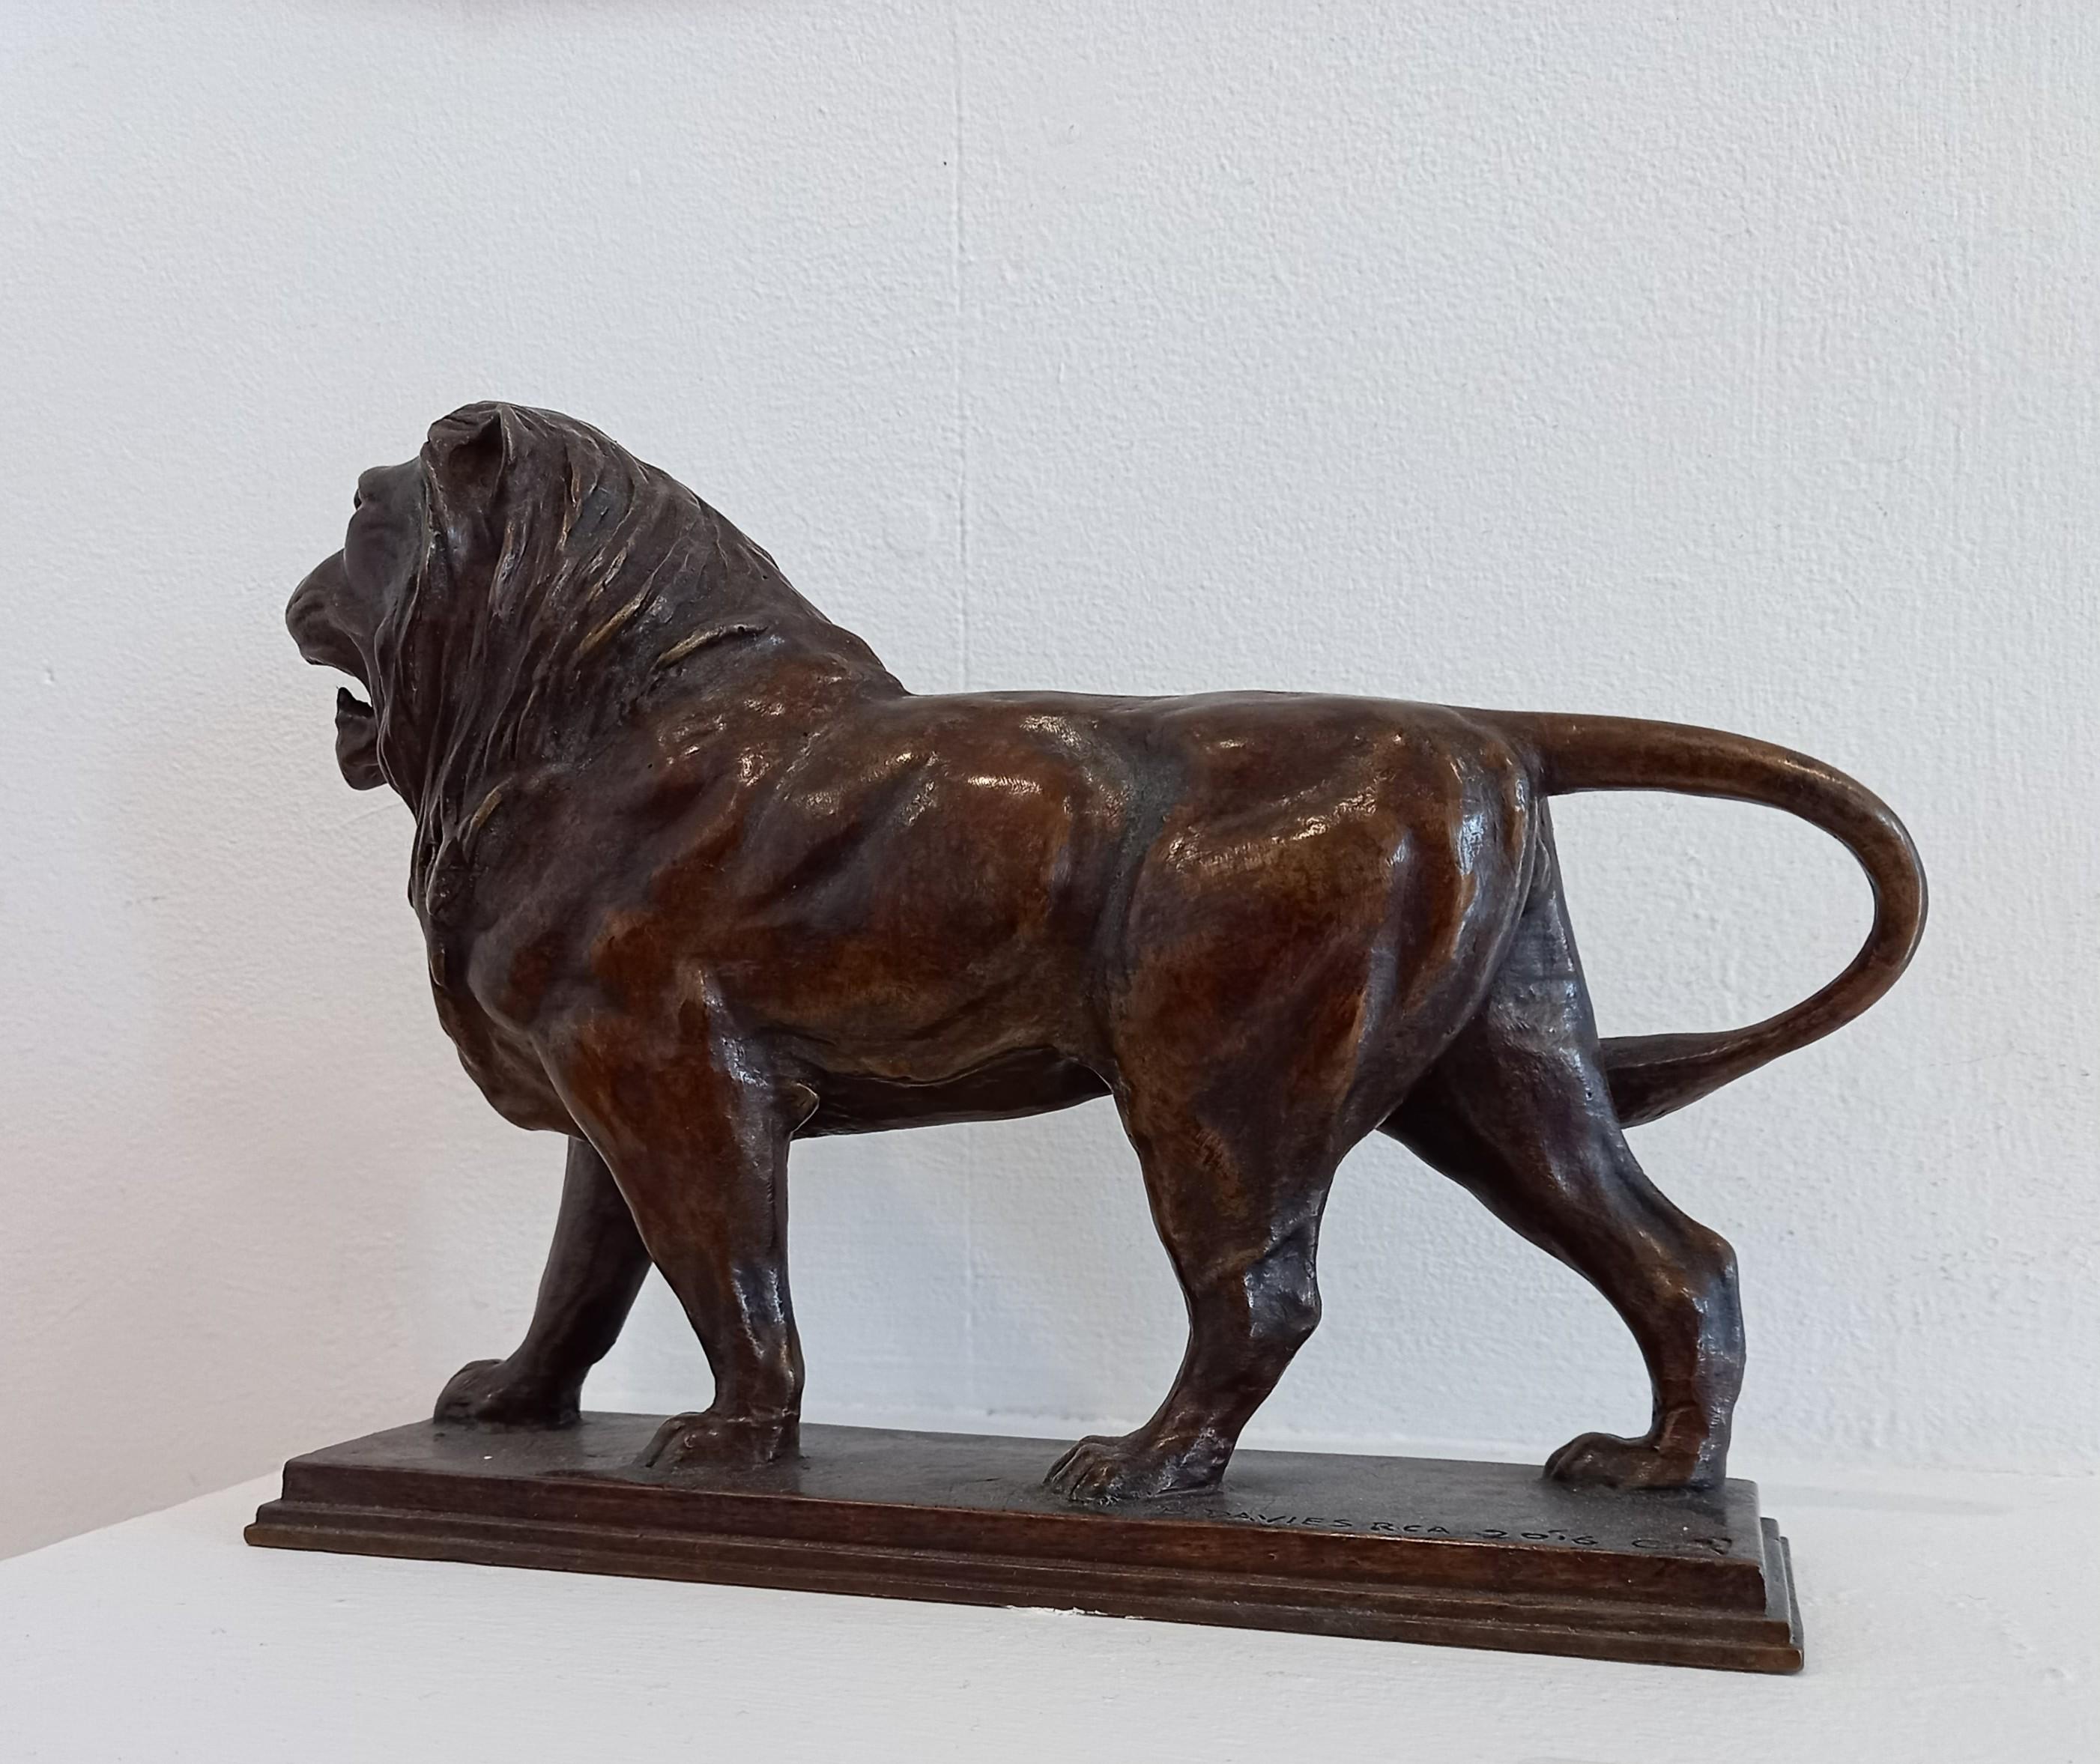 Lion - Sculpture de Barry Davies 